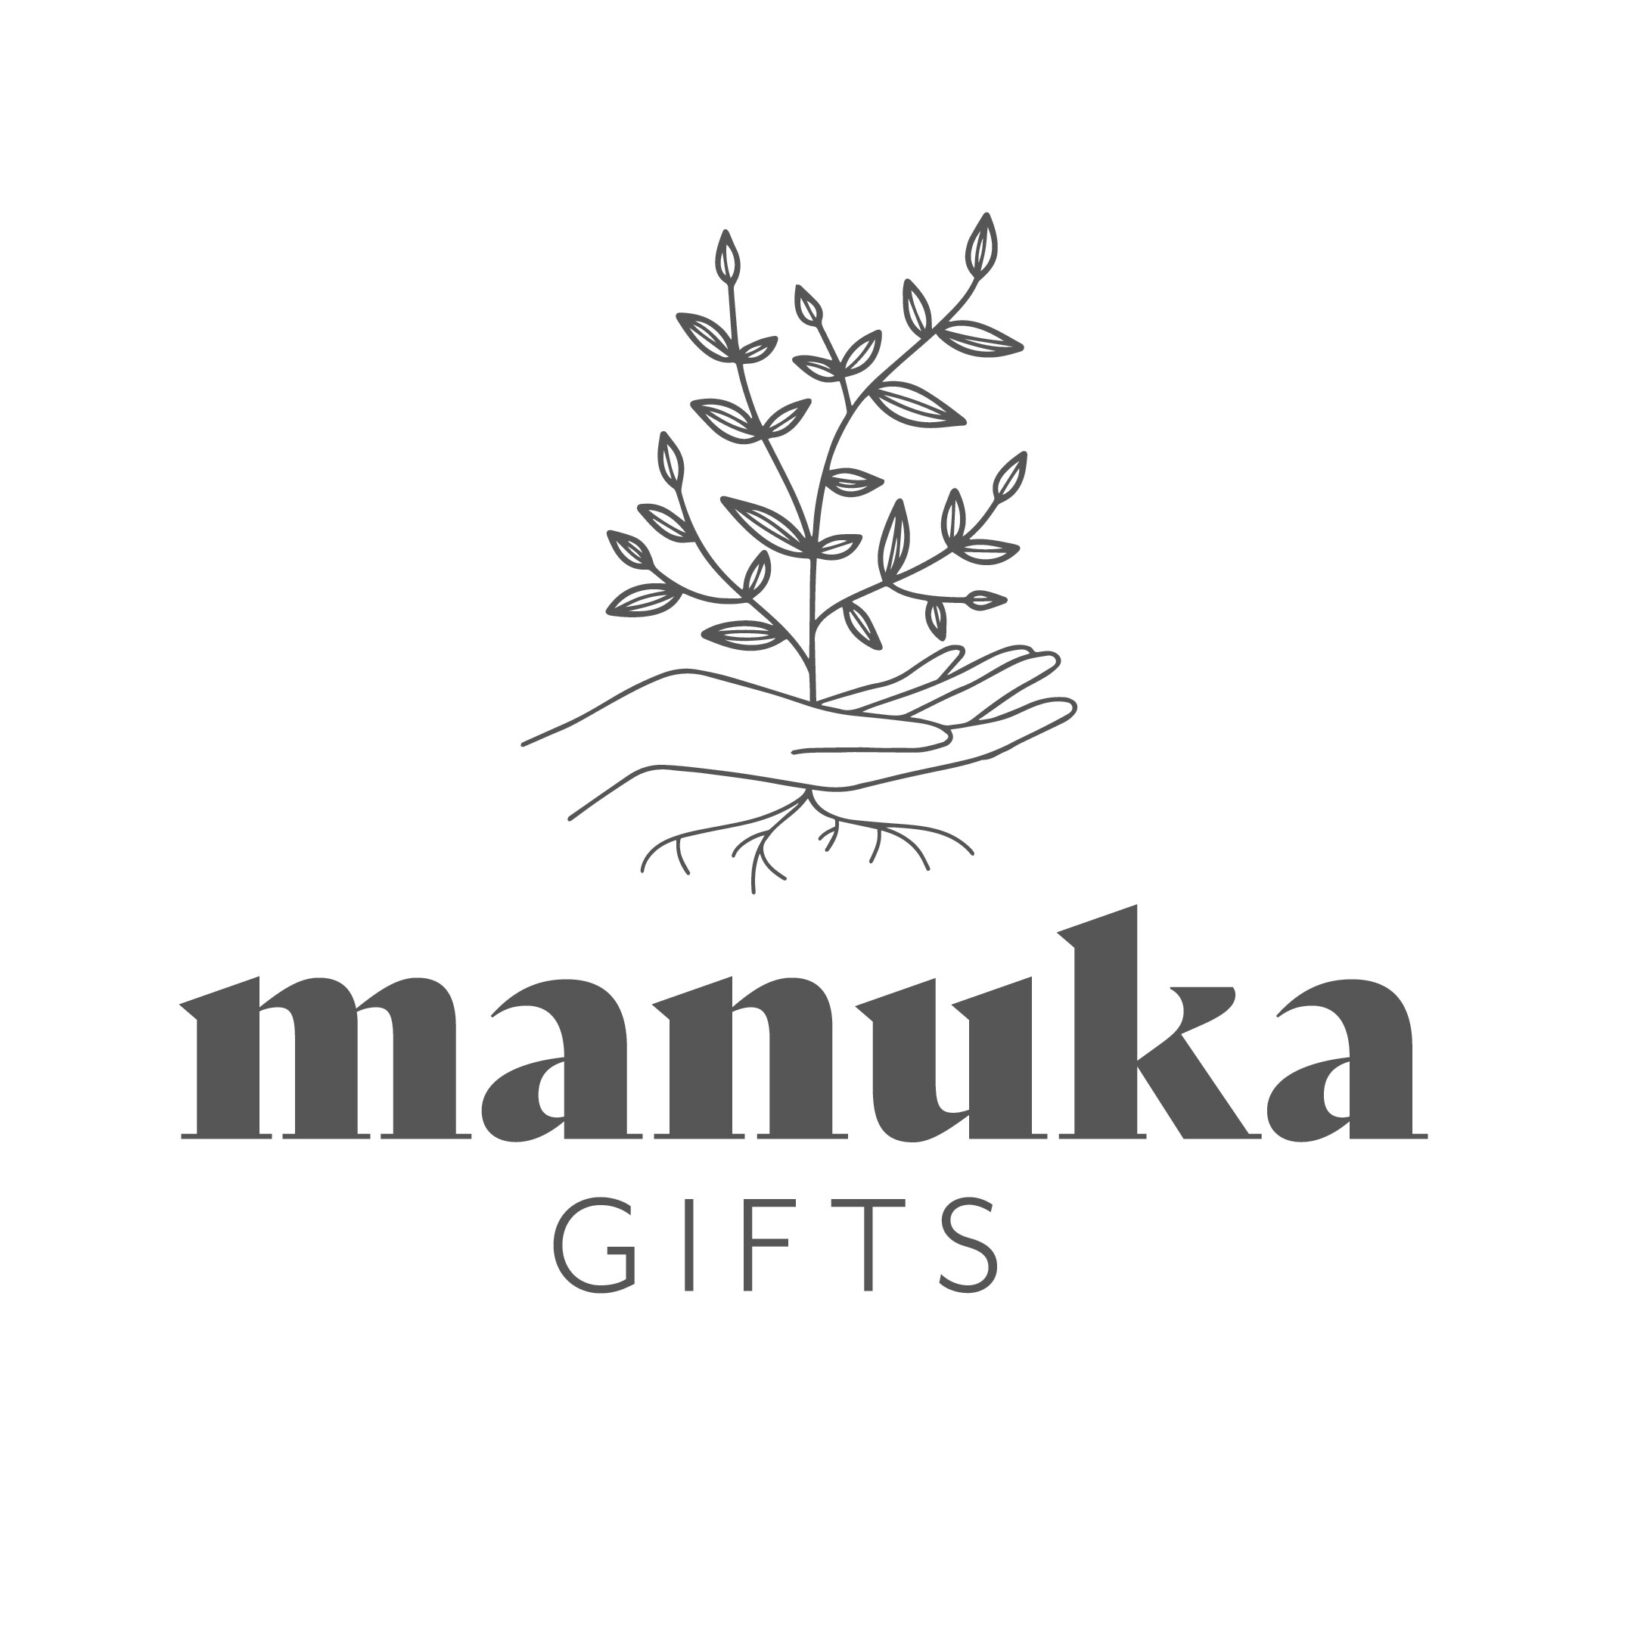 Manuka Gifts